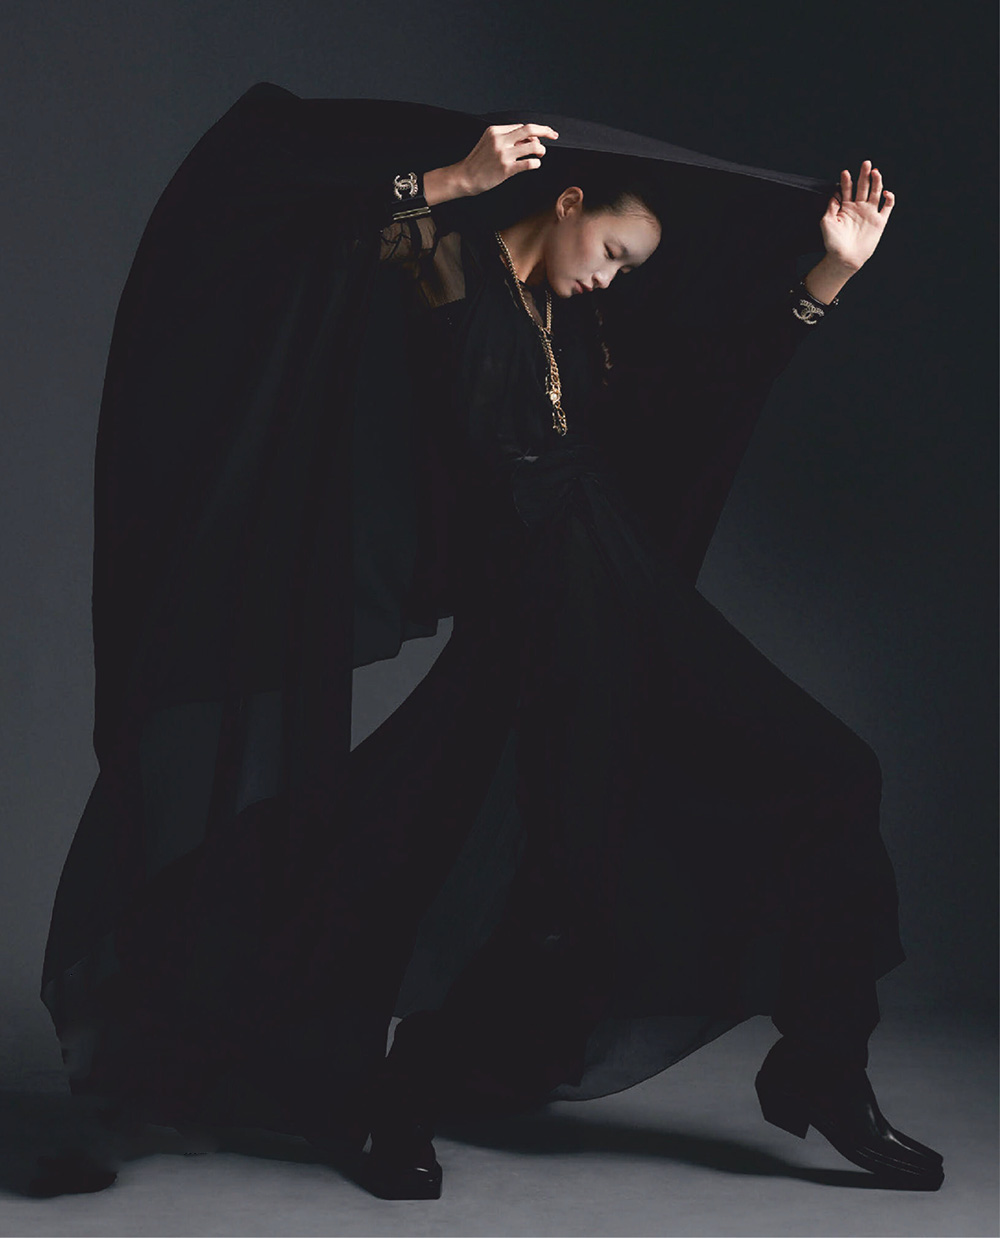 Frances Liu and Vanessa Pan by Cheng Po Ou Yang for Vogue Taiwan December 2020